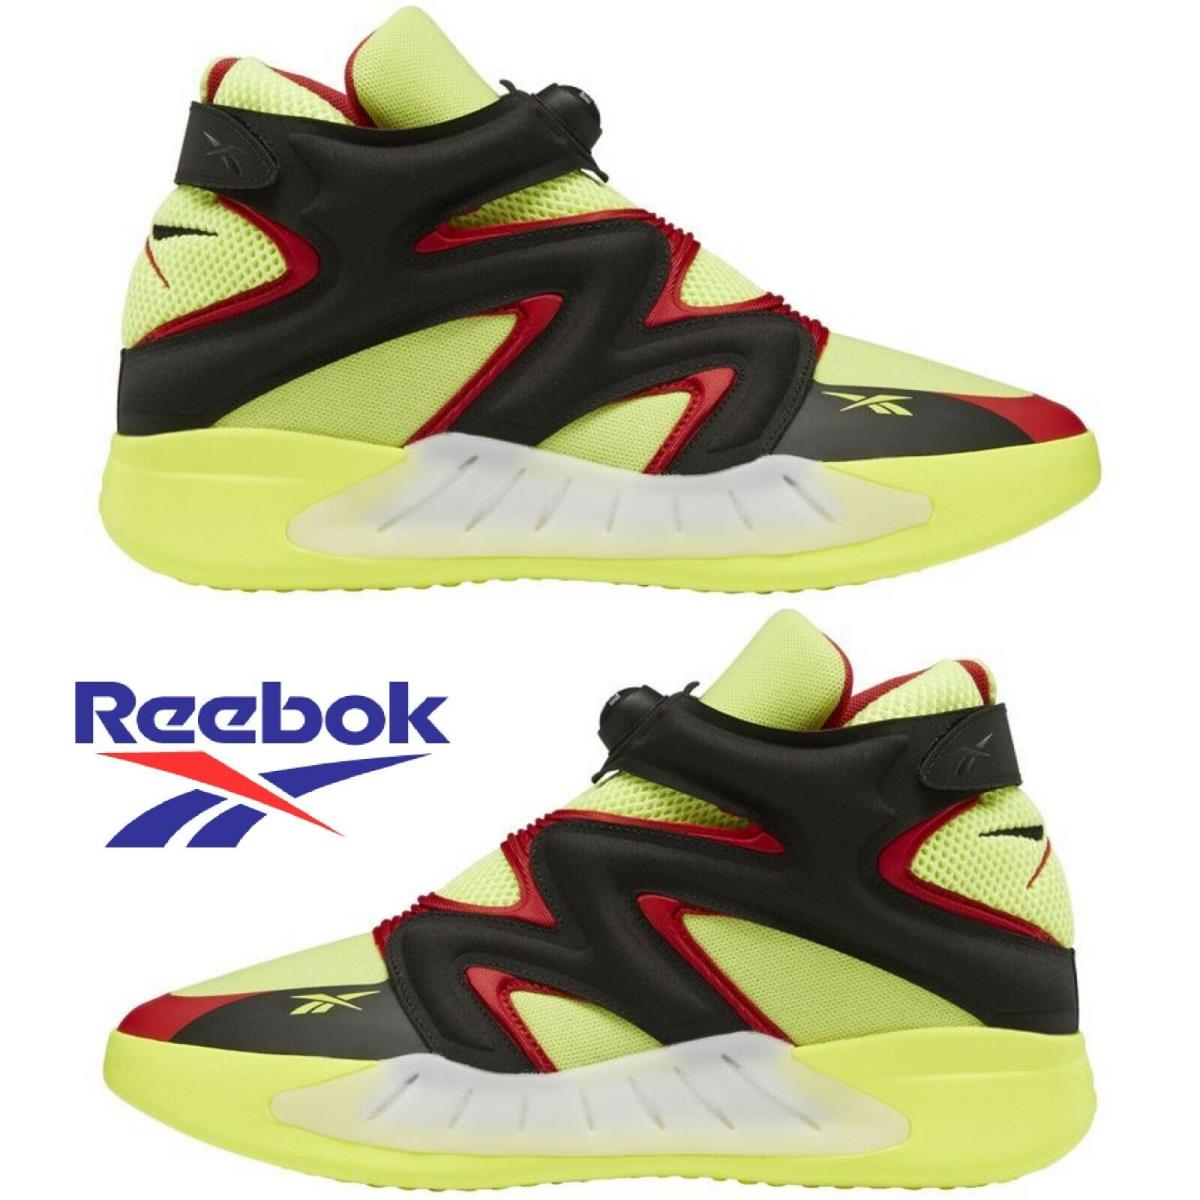 Reebok Instapump Fury Zone Basketball Shoes Men`s Sneakers Running Casual Sport